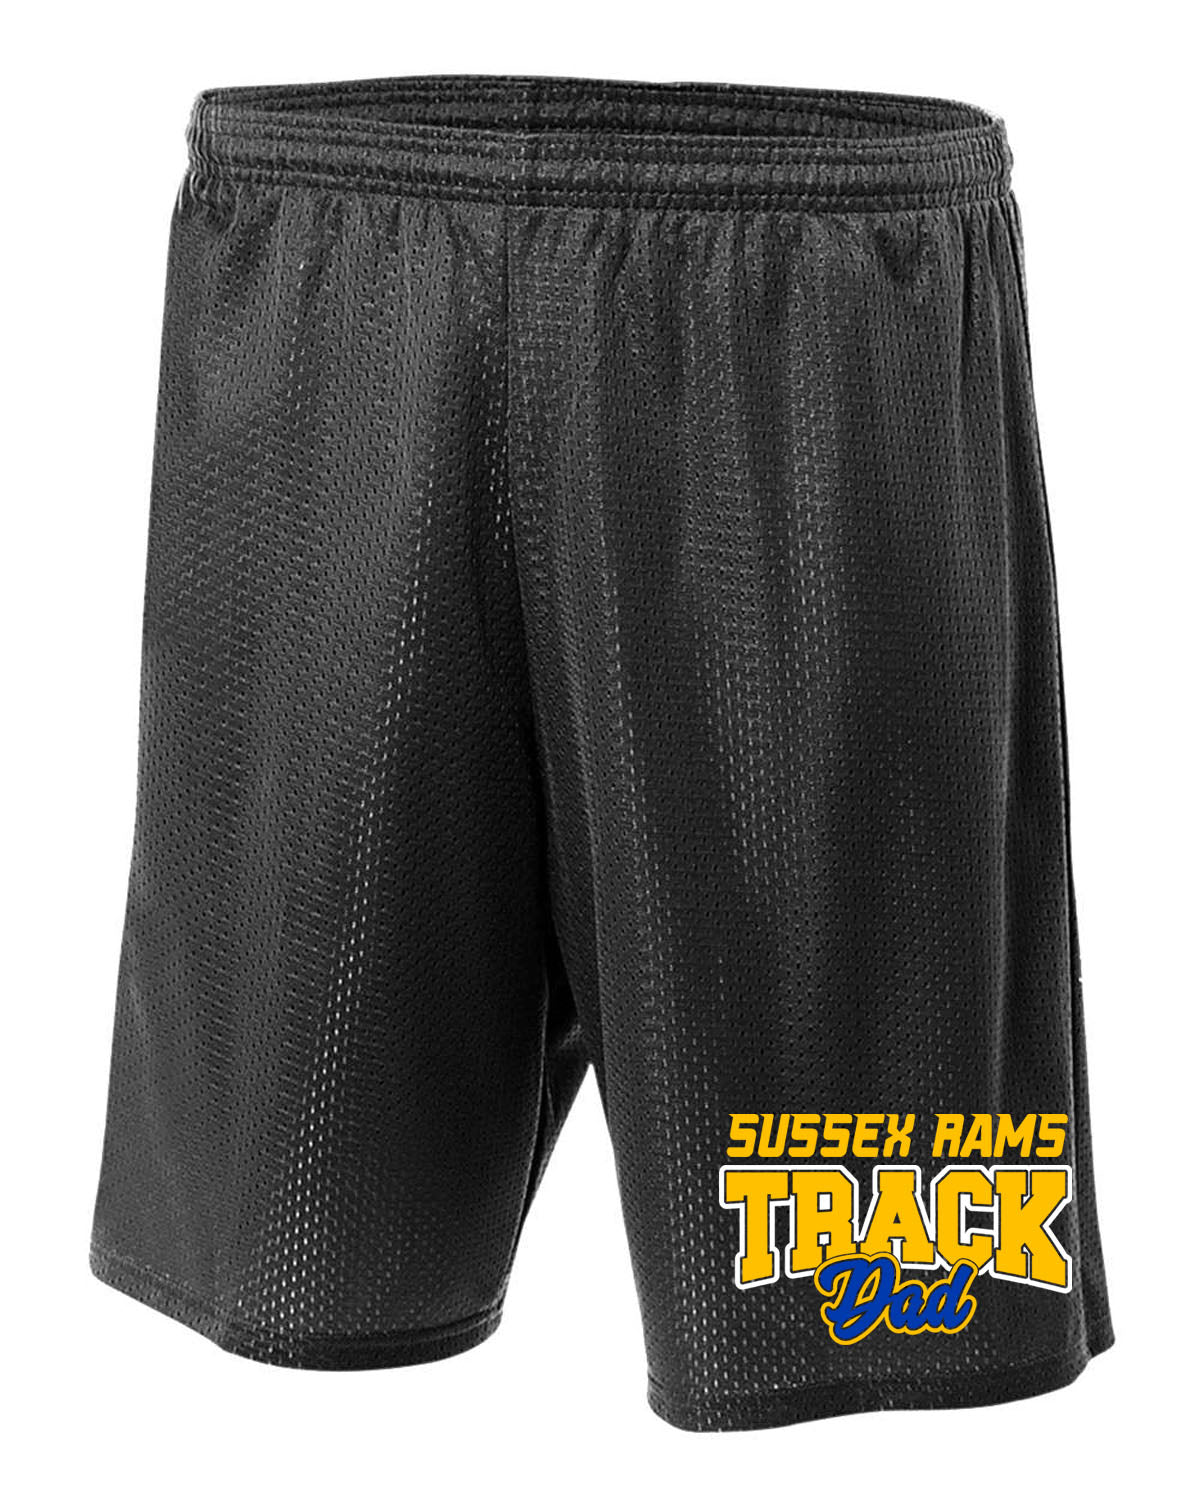 Sussex Rams Track Mesh Shorts Design 1